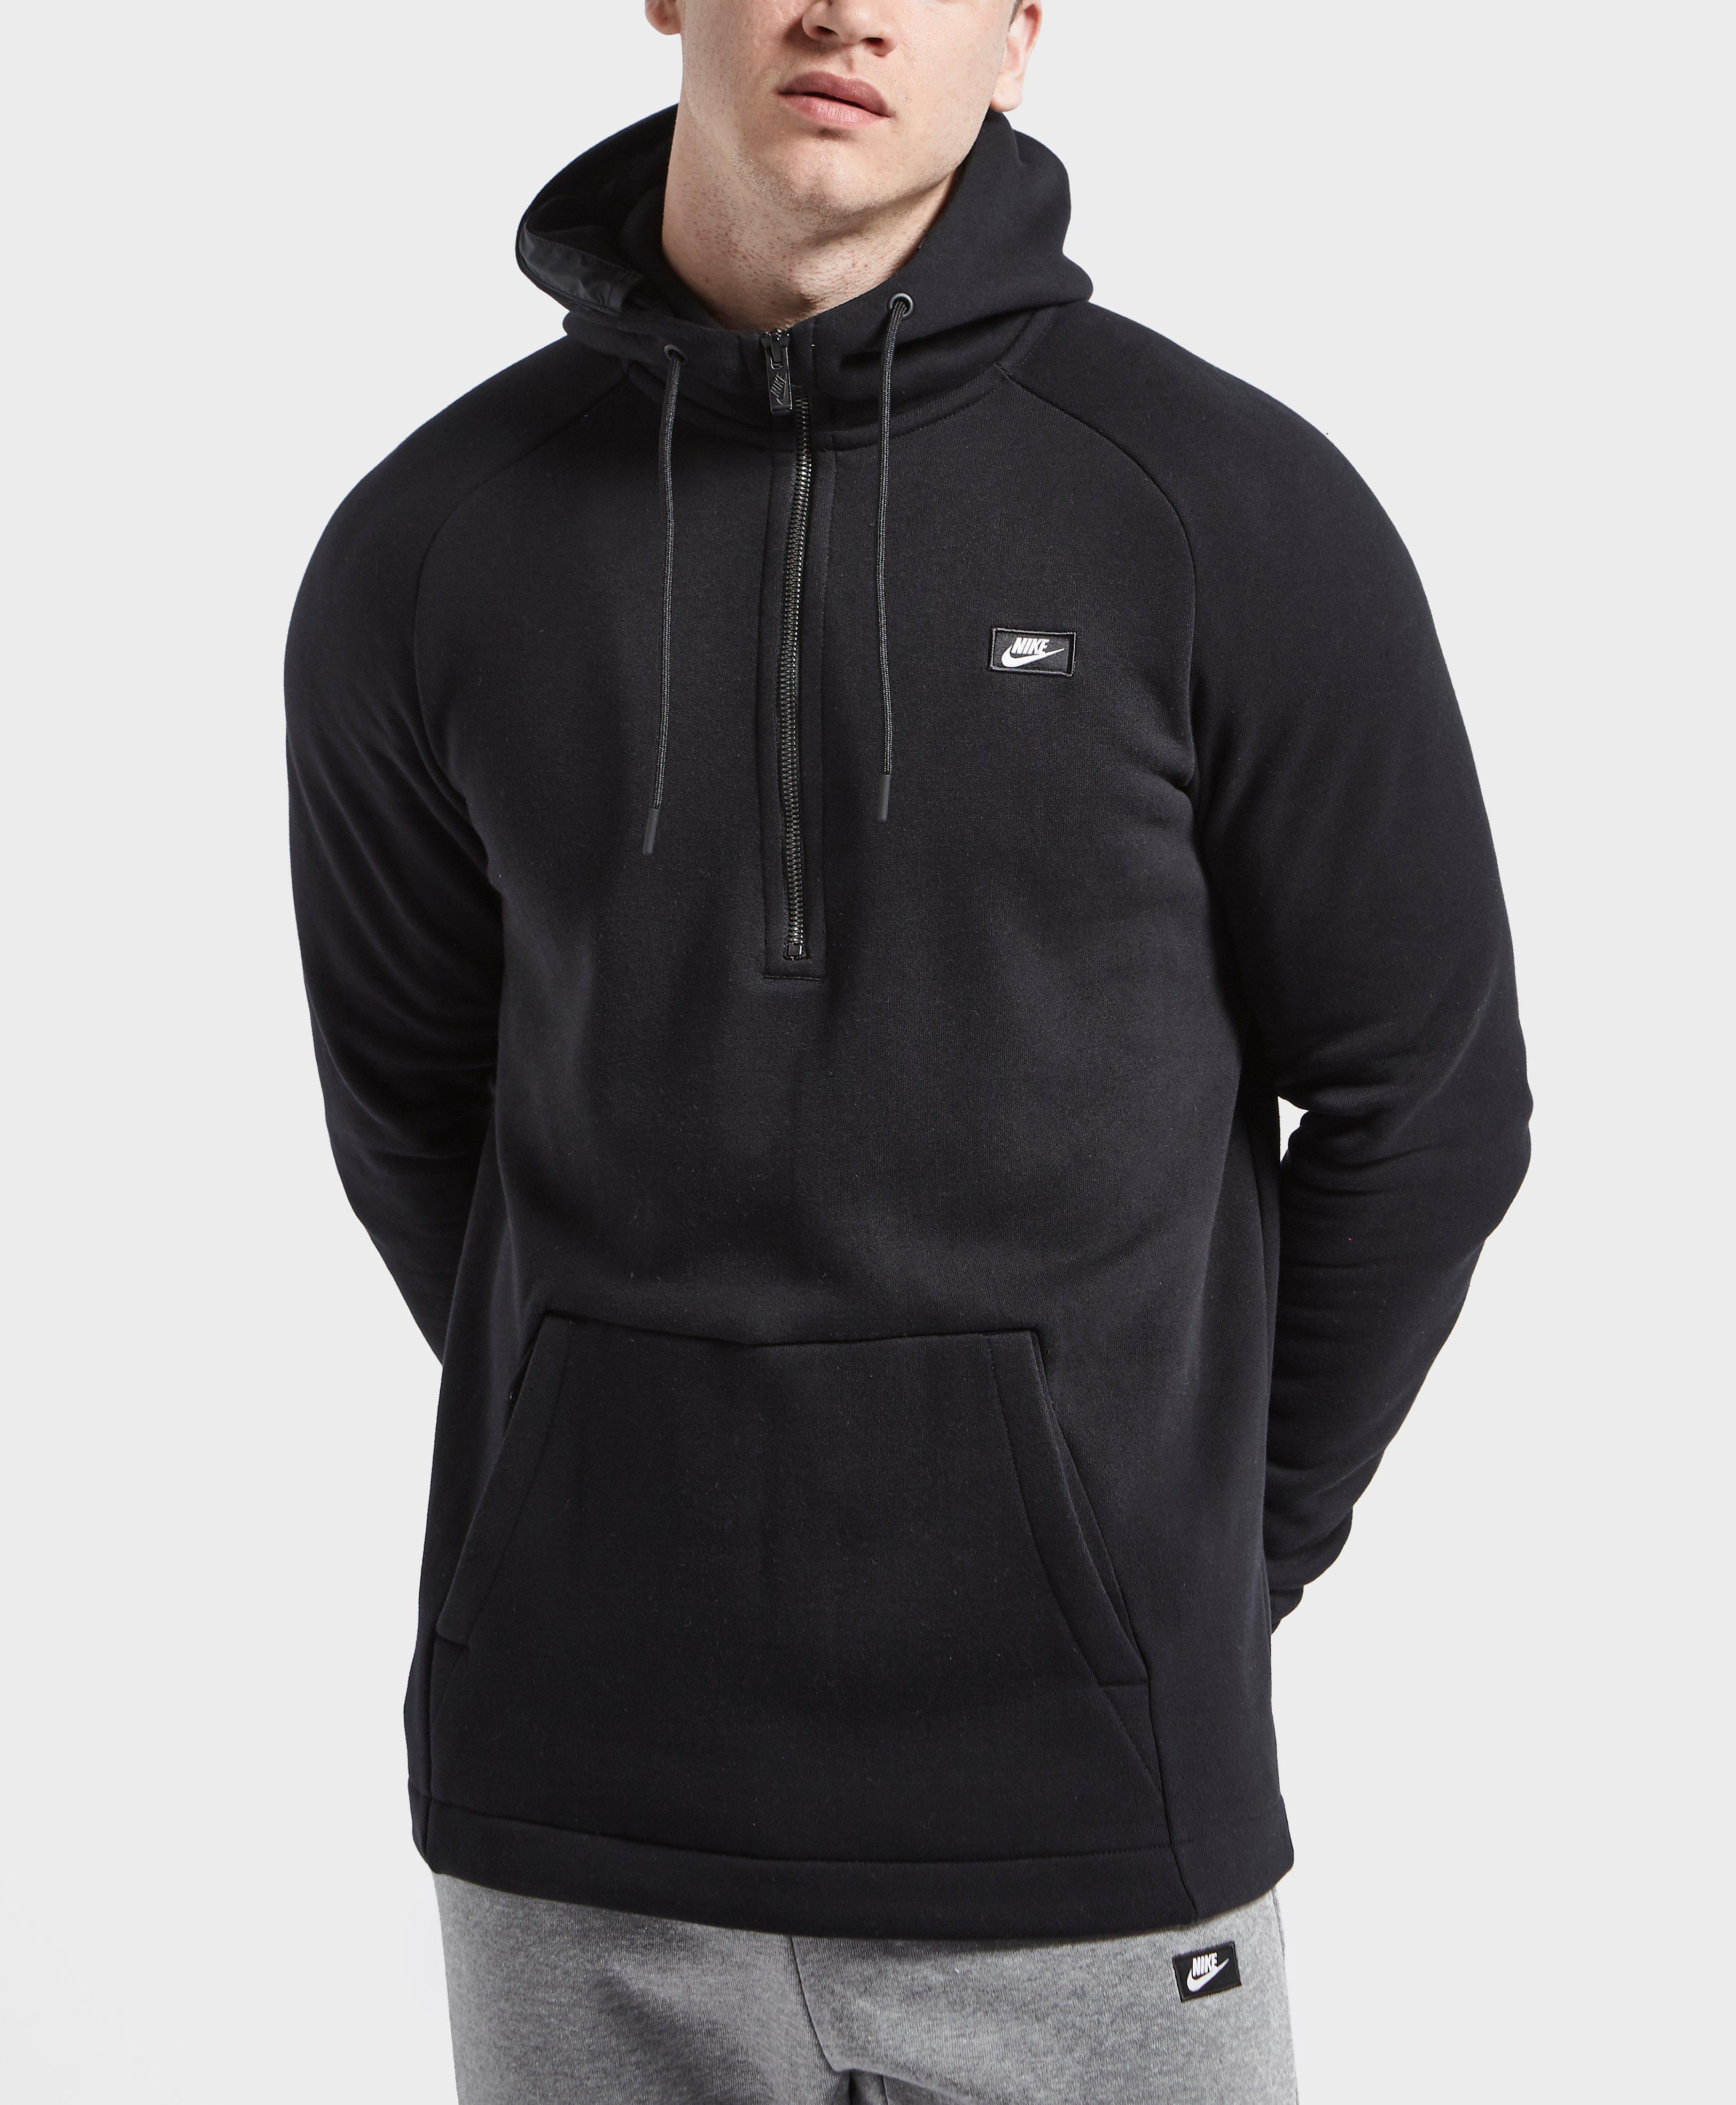 Nike Cotton Modern Half Zip Hoody in Black for Men - Lyst